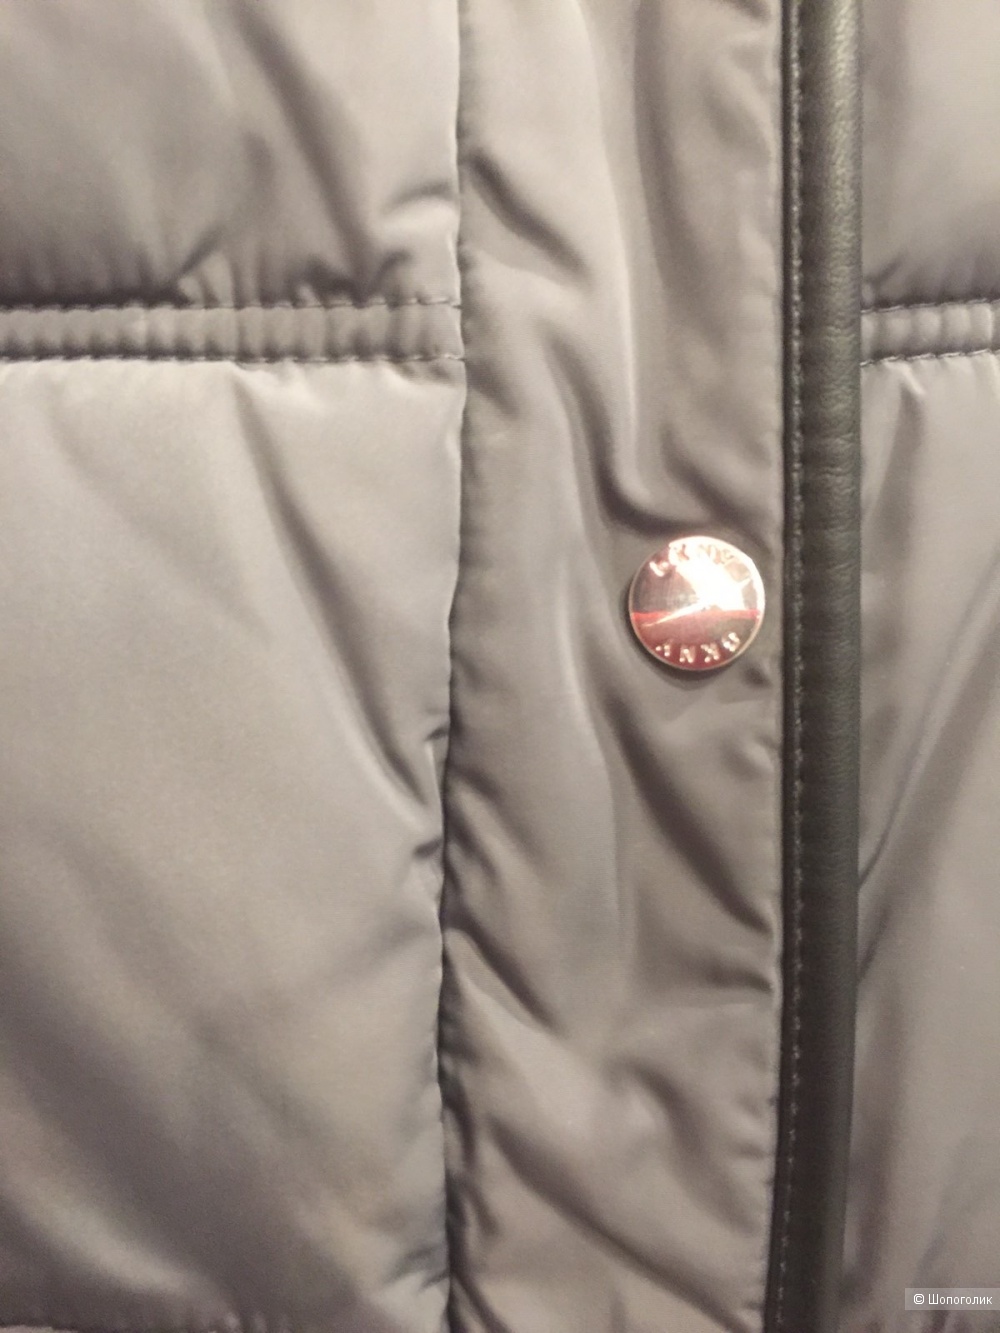 Пальто/пуховик DKNY размер M (на Л)